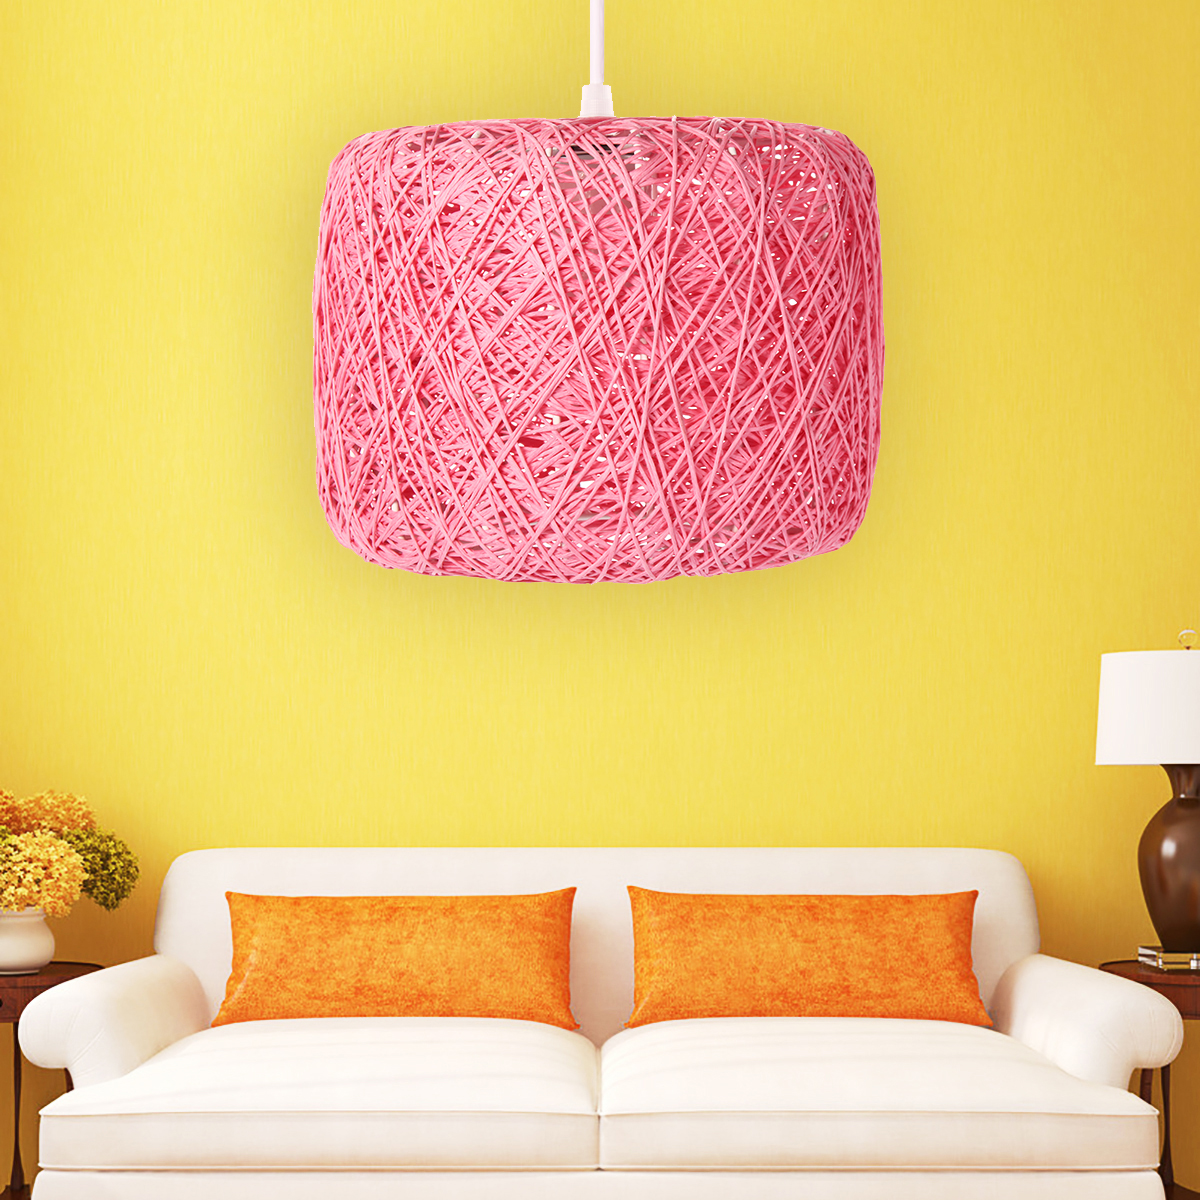 E27-Modern-Pendant-Light-Rope-Ceiling-Lamp-Chandelier-Home-Fixture-Decoration-Lamp-Cover-1347040-7